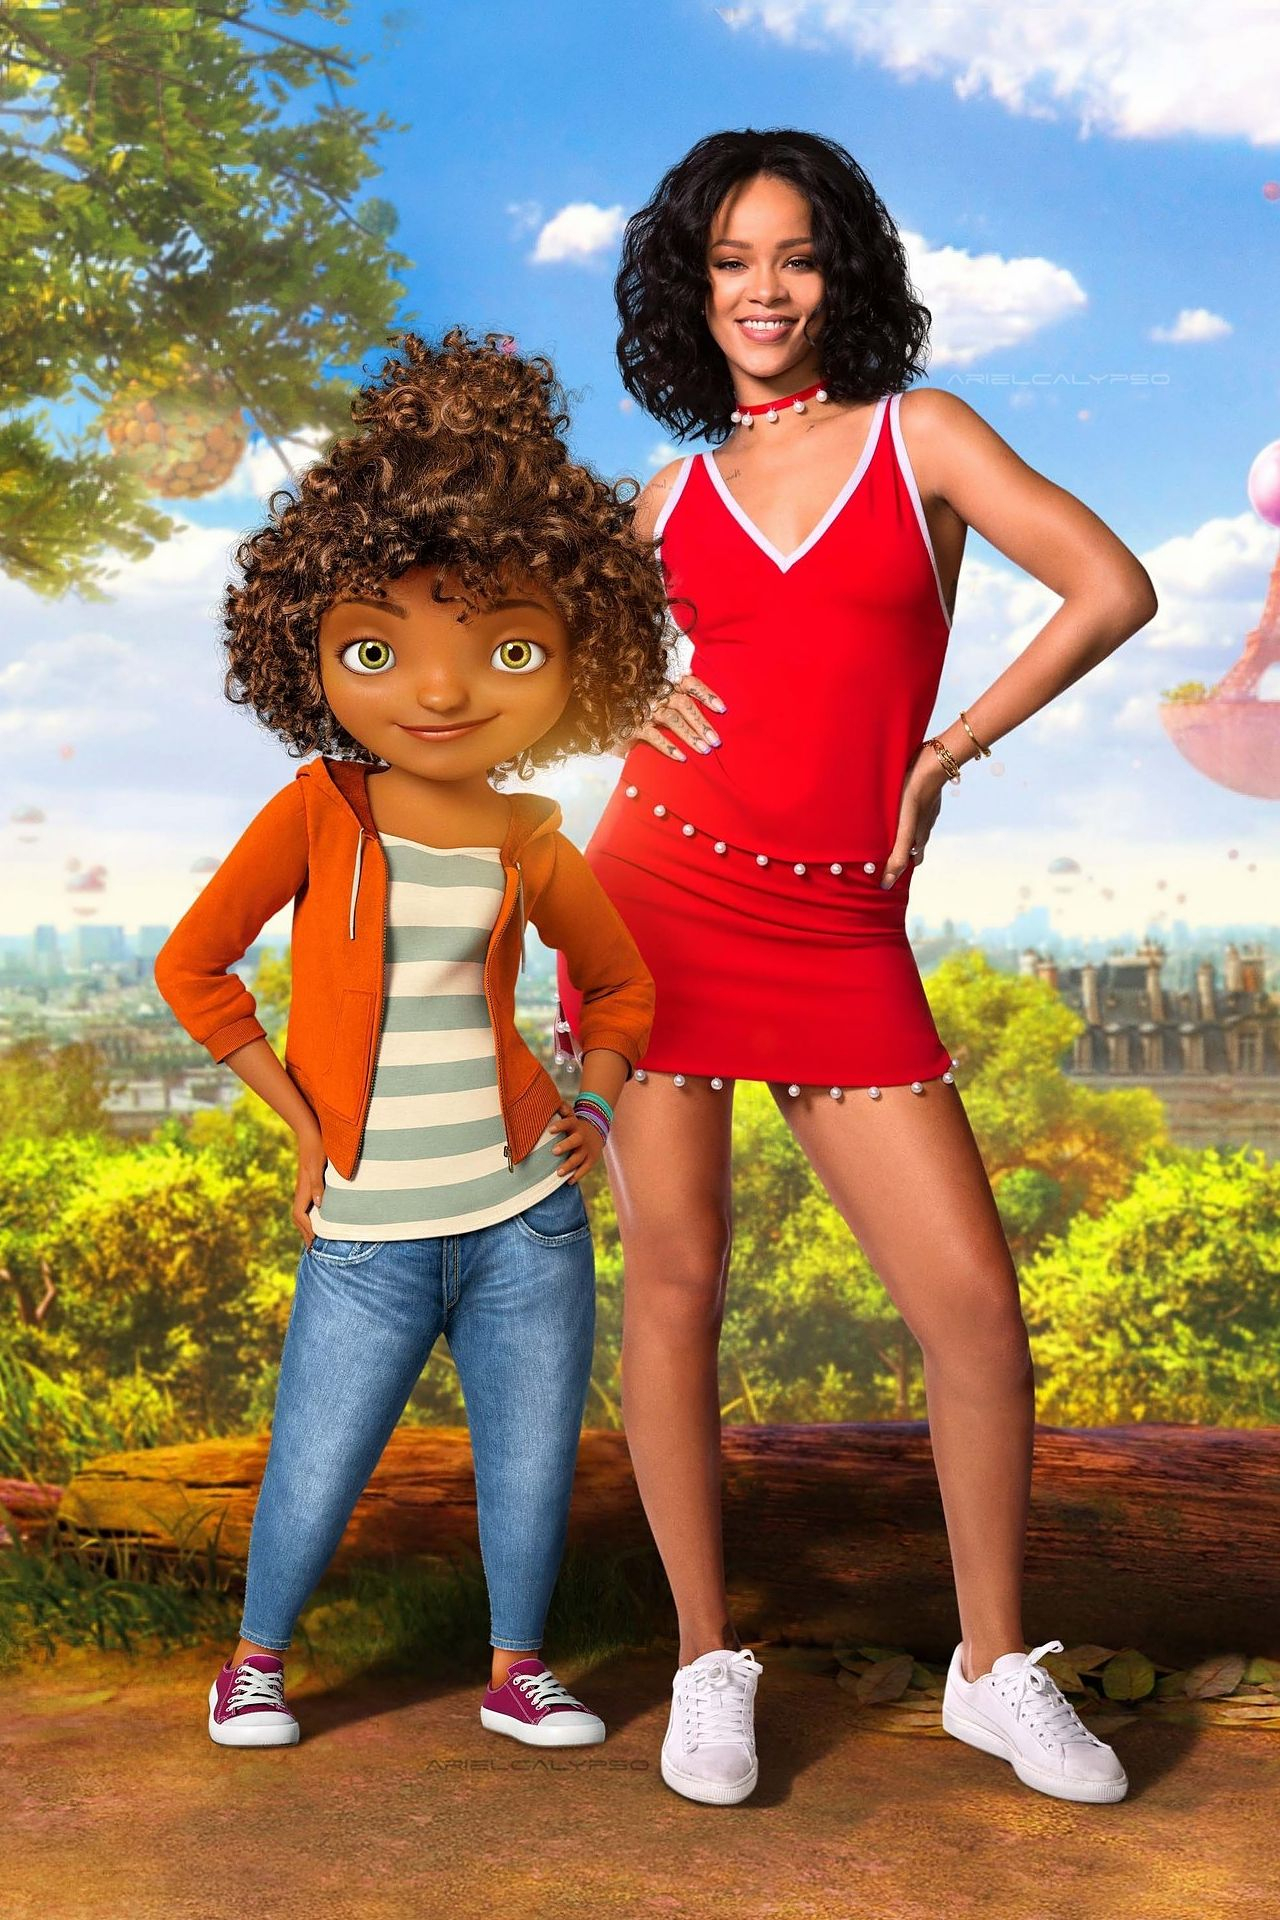 Promotional Photo For Dreamworks “Home”. | Rihanna Movies dedans Film D Animation Dreamworks